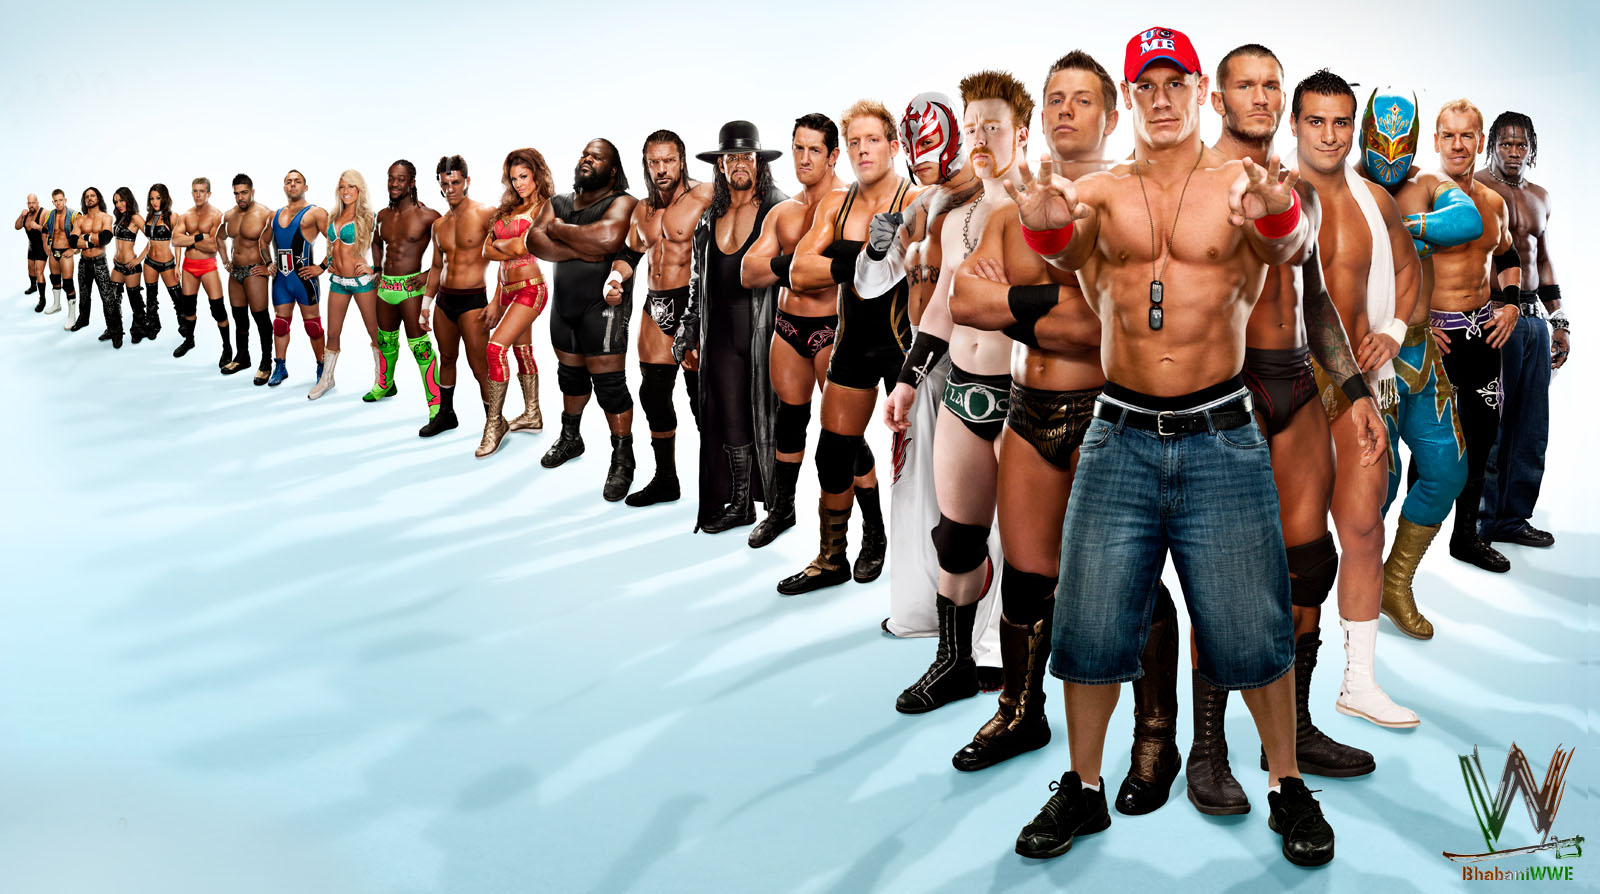 Wwe Superstars Wallpaper On Wrestling Media